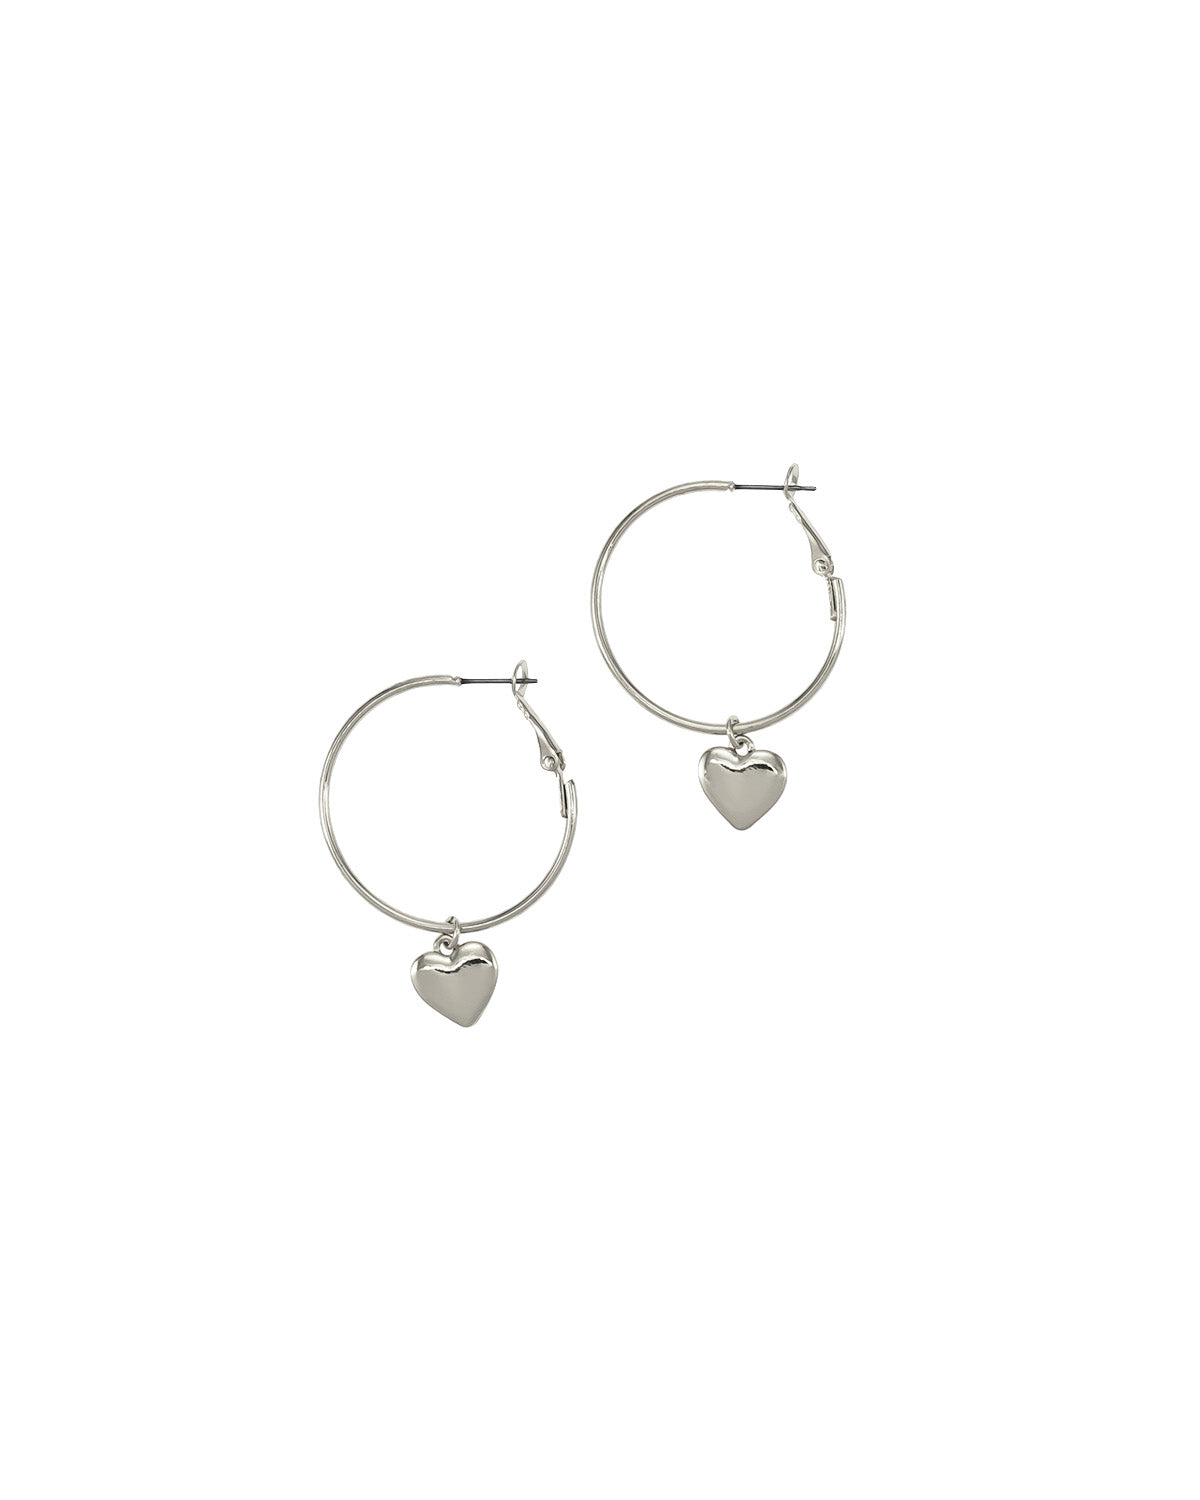 Dauplaise Jewelry -  'Love Her' Hoop with Heart Drop Earring